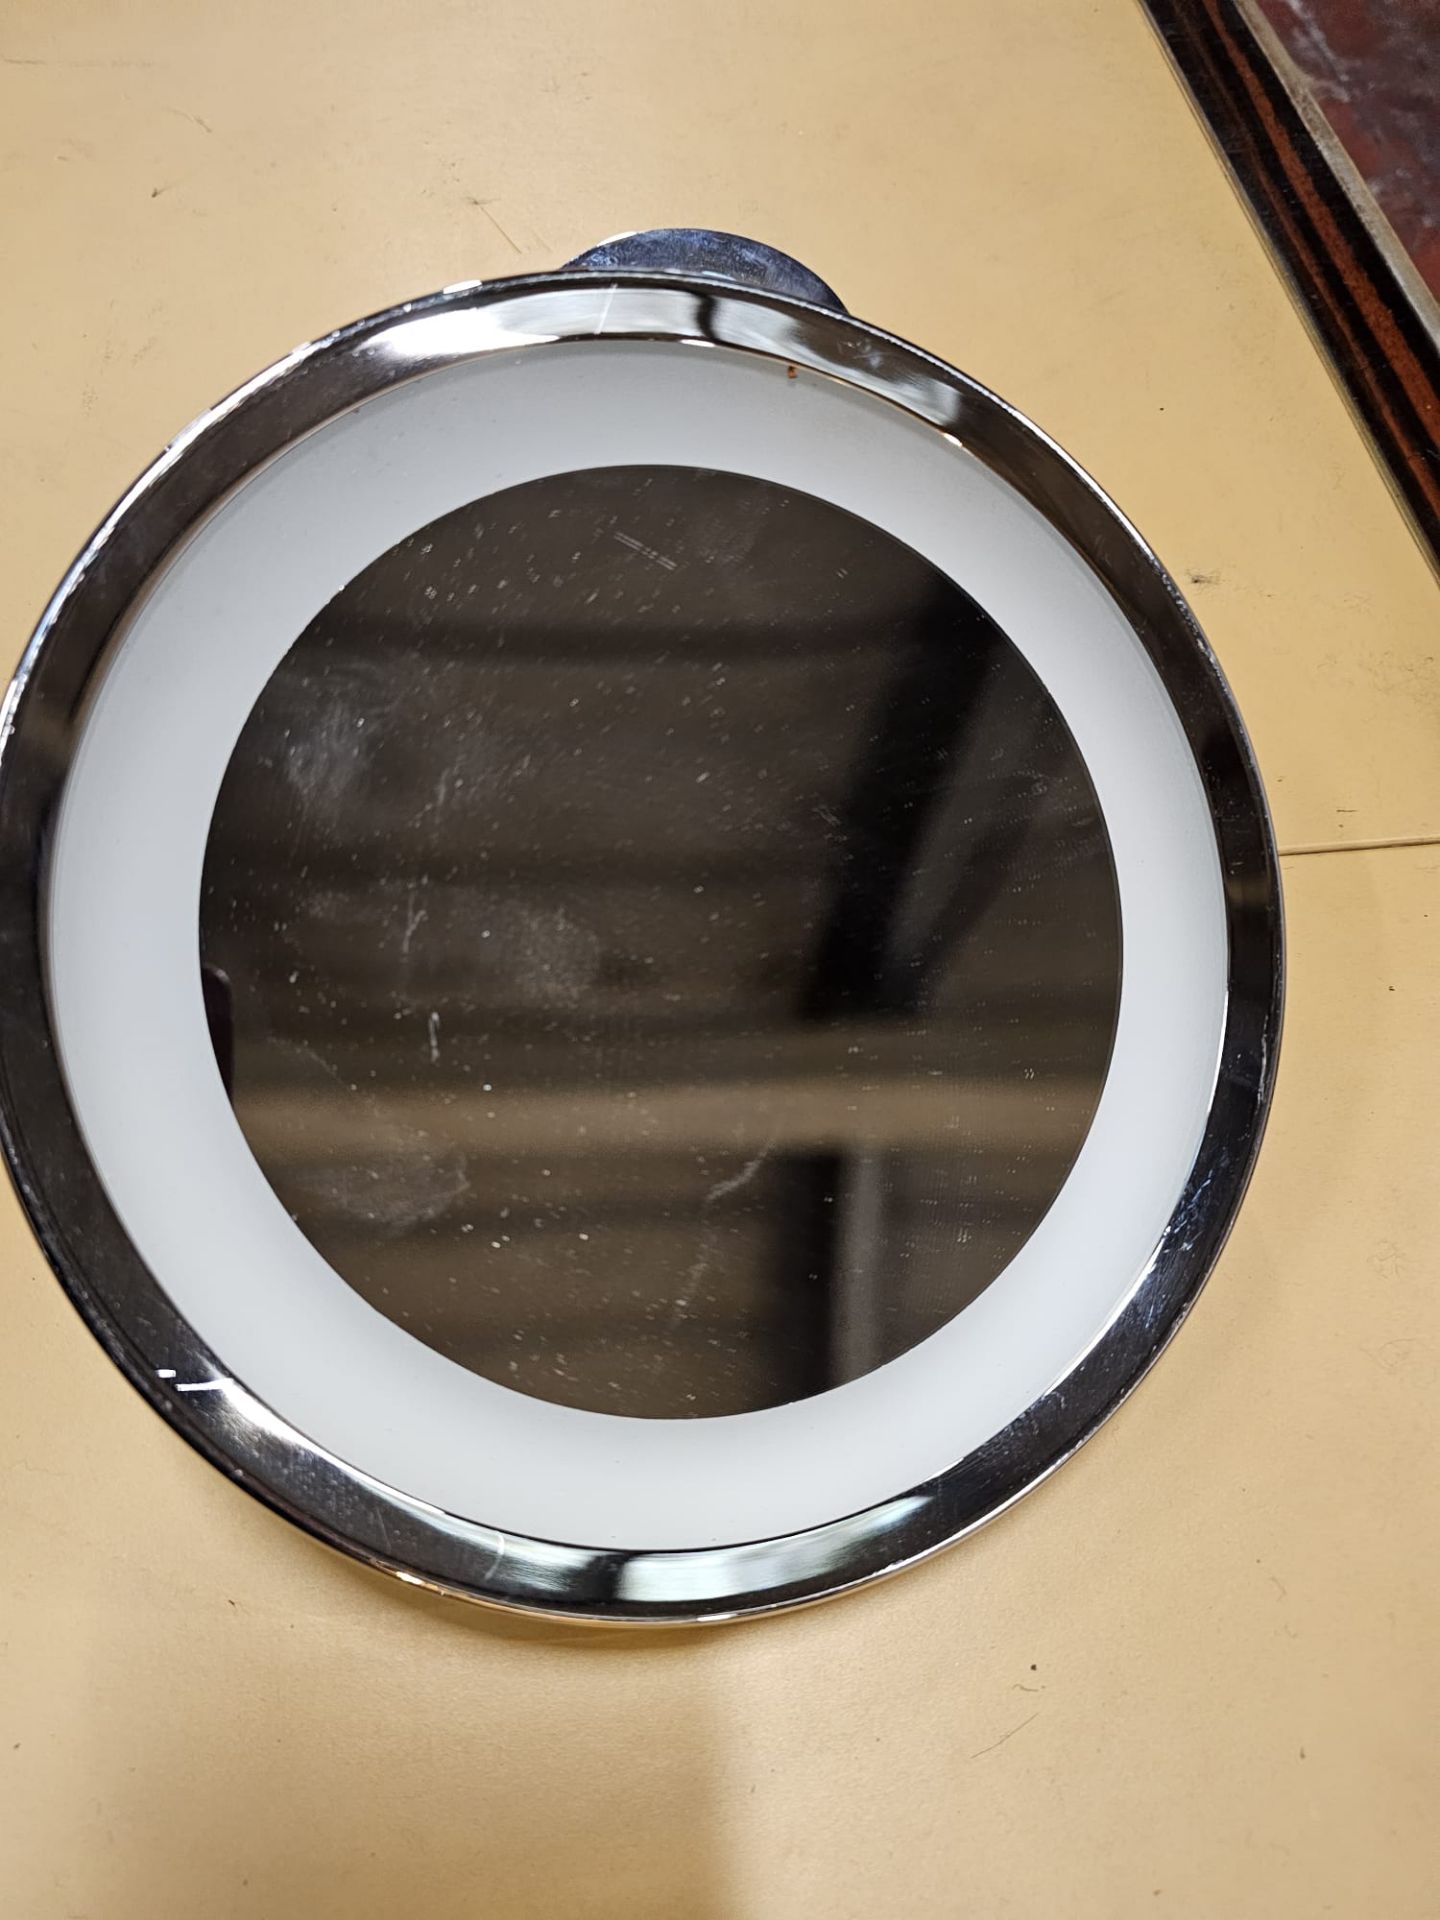 LED Illuminated Magnifying Vanity Mirror For Bathroom Round Ingress Protection Rating IP46 - Image 3 of 3